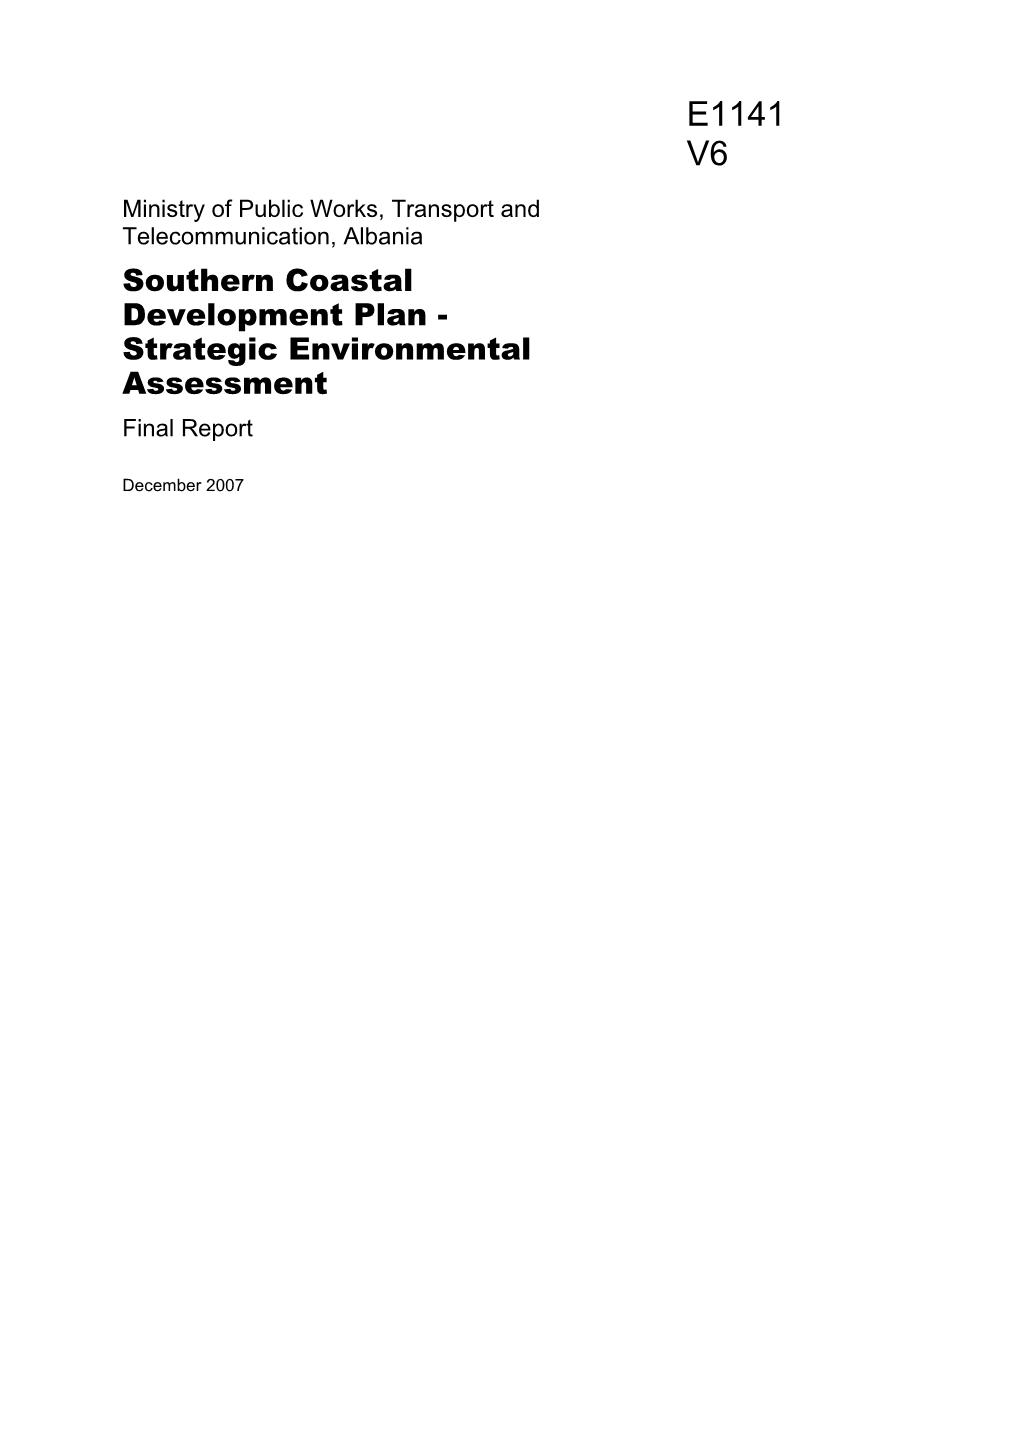 Southern Coastal Development Plan - Strategic Environmental Assessment